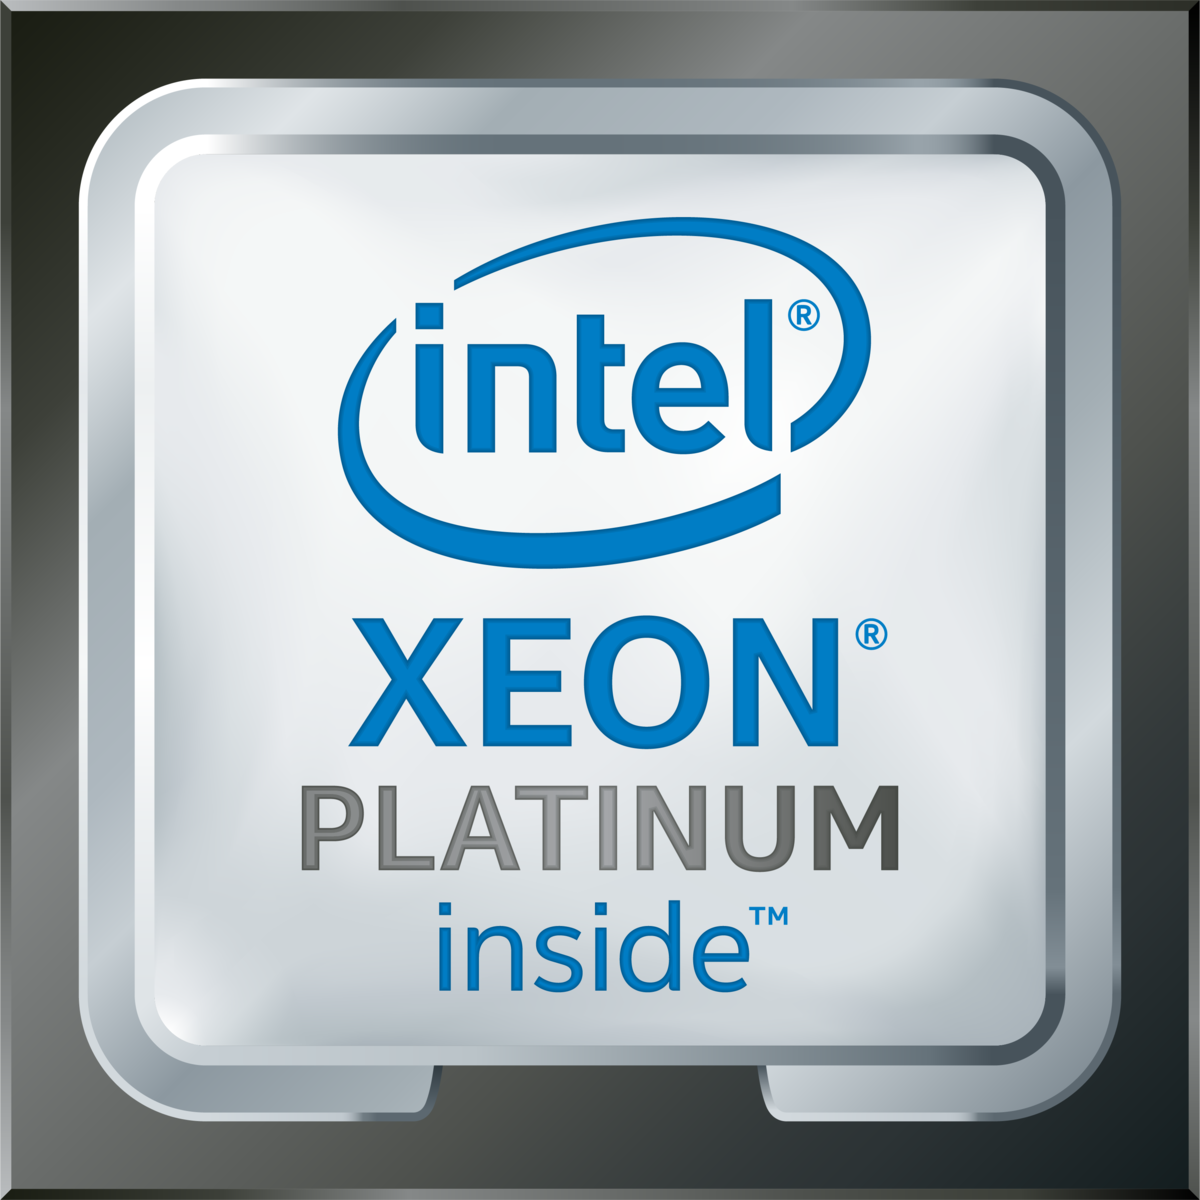 Intel(R) Xeon(R) Platinum 8124M CPU @ 3.00GHz's logo